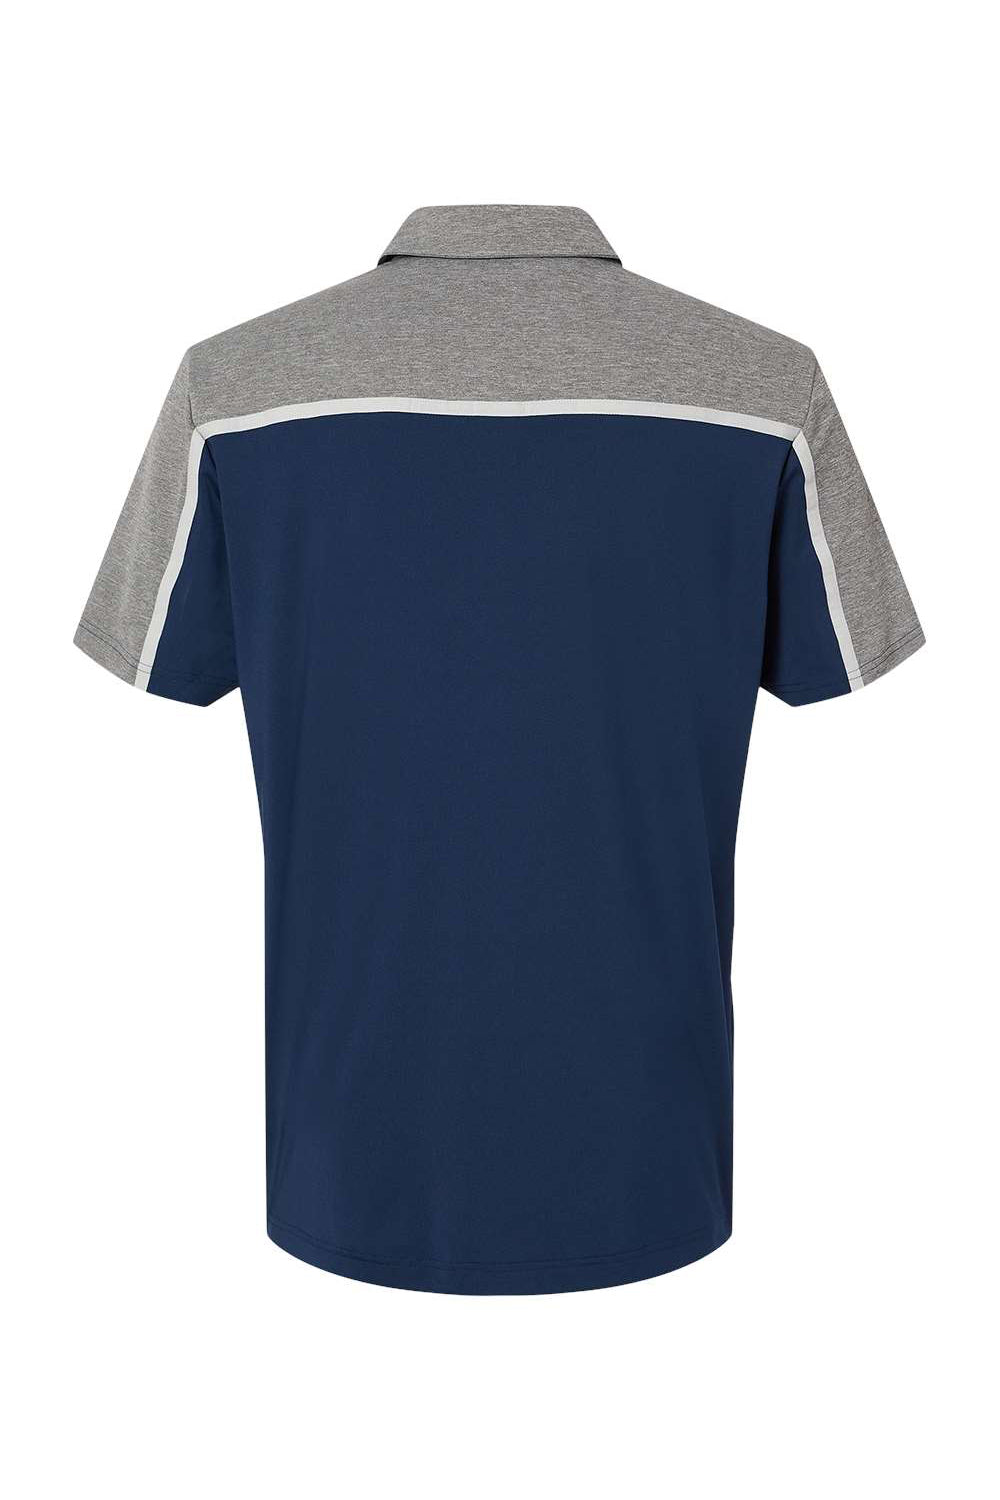 Adidas A512 Mens Ultimate Colorblocked Short Sleeve Polo Shirt Collegiate Navy Blue/Grey/Grey Melange Flat Back